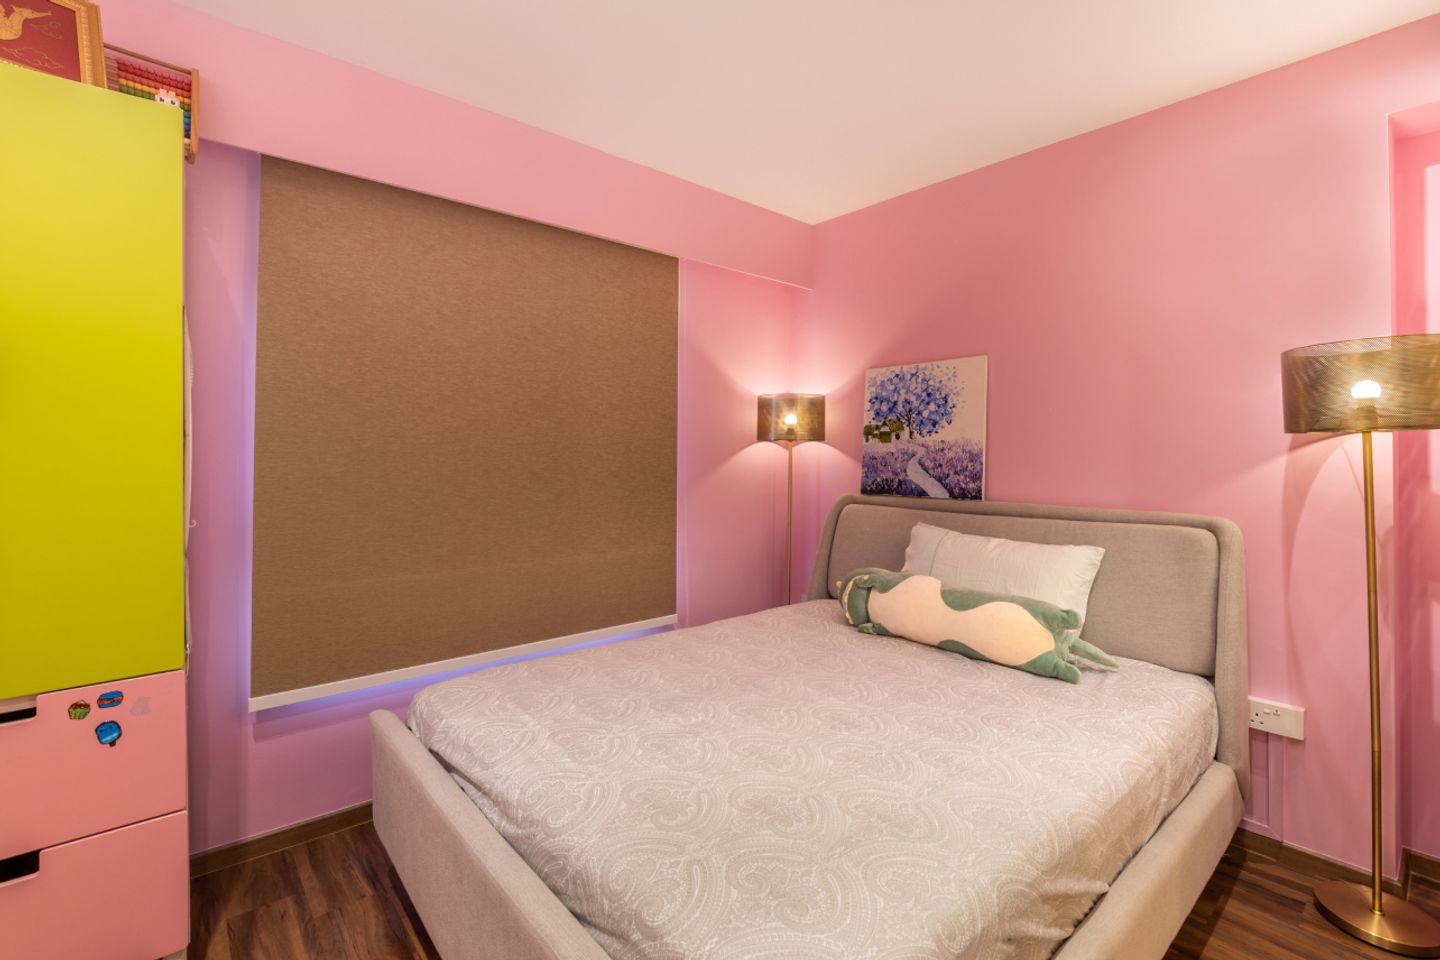 Vibrant Pink Bedroom Wall Paint Design - Livspace